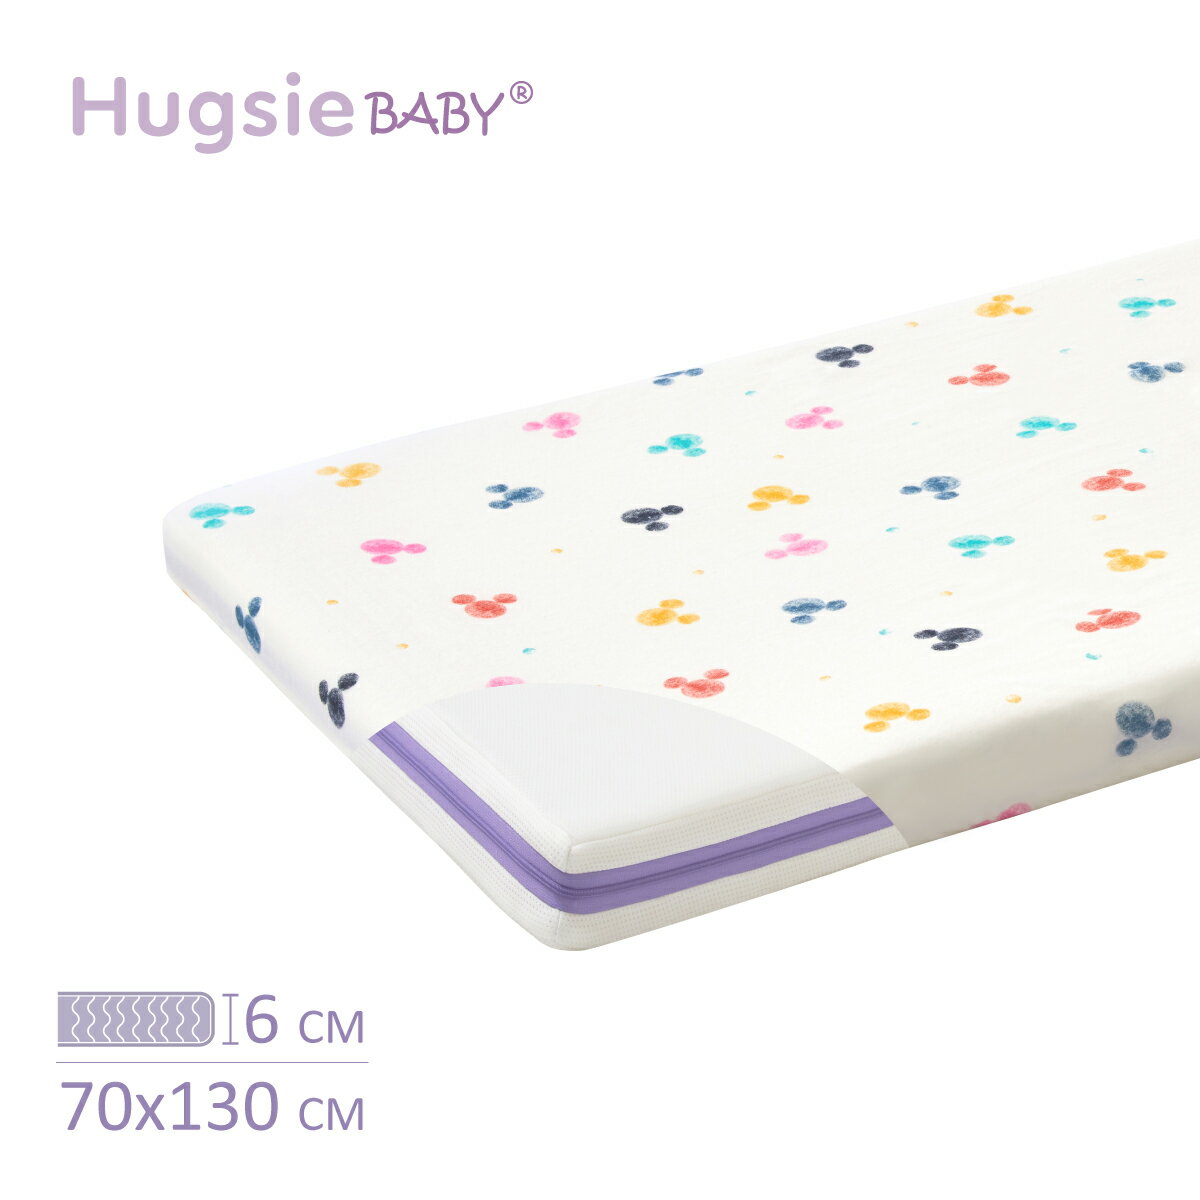 HugsieBABY迪士尼系列透氣水洗嬰兒床墊(附贈抗菌床單) 70×130★衛立兒生活館★